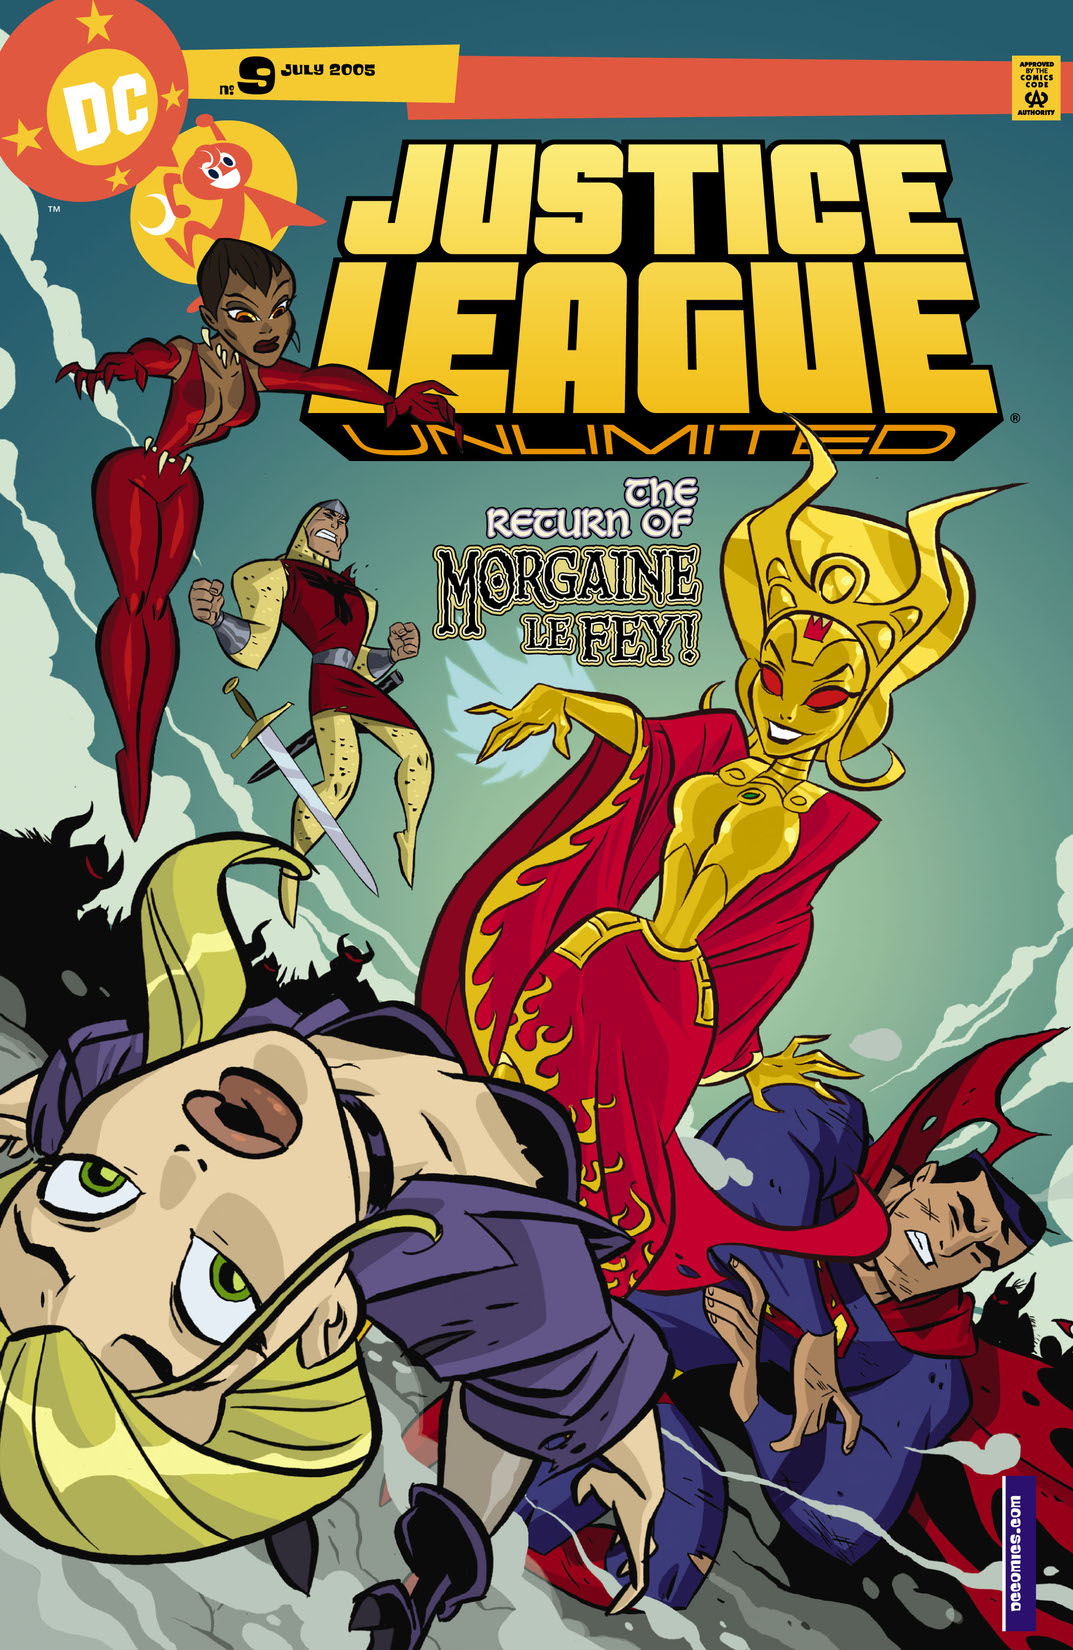 Justice League Unlimited #9 preview images